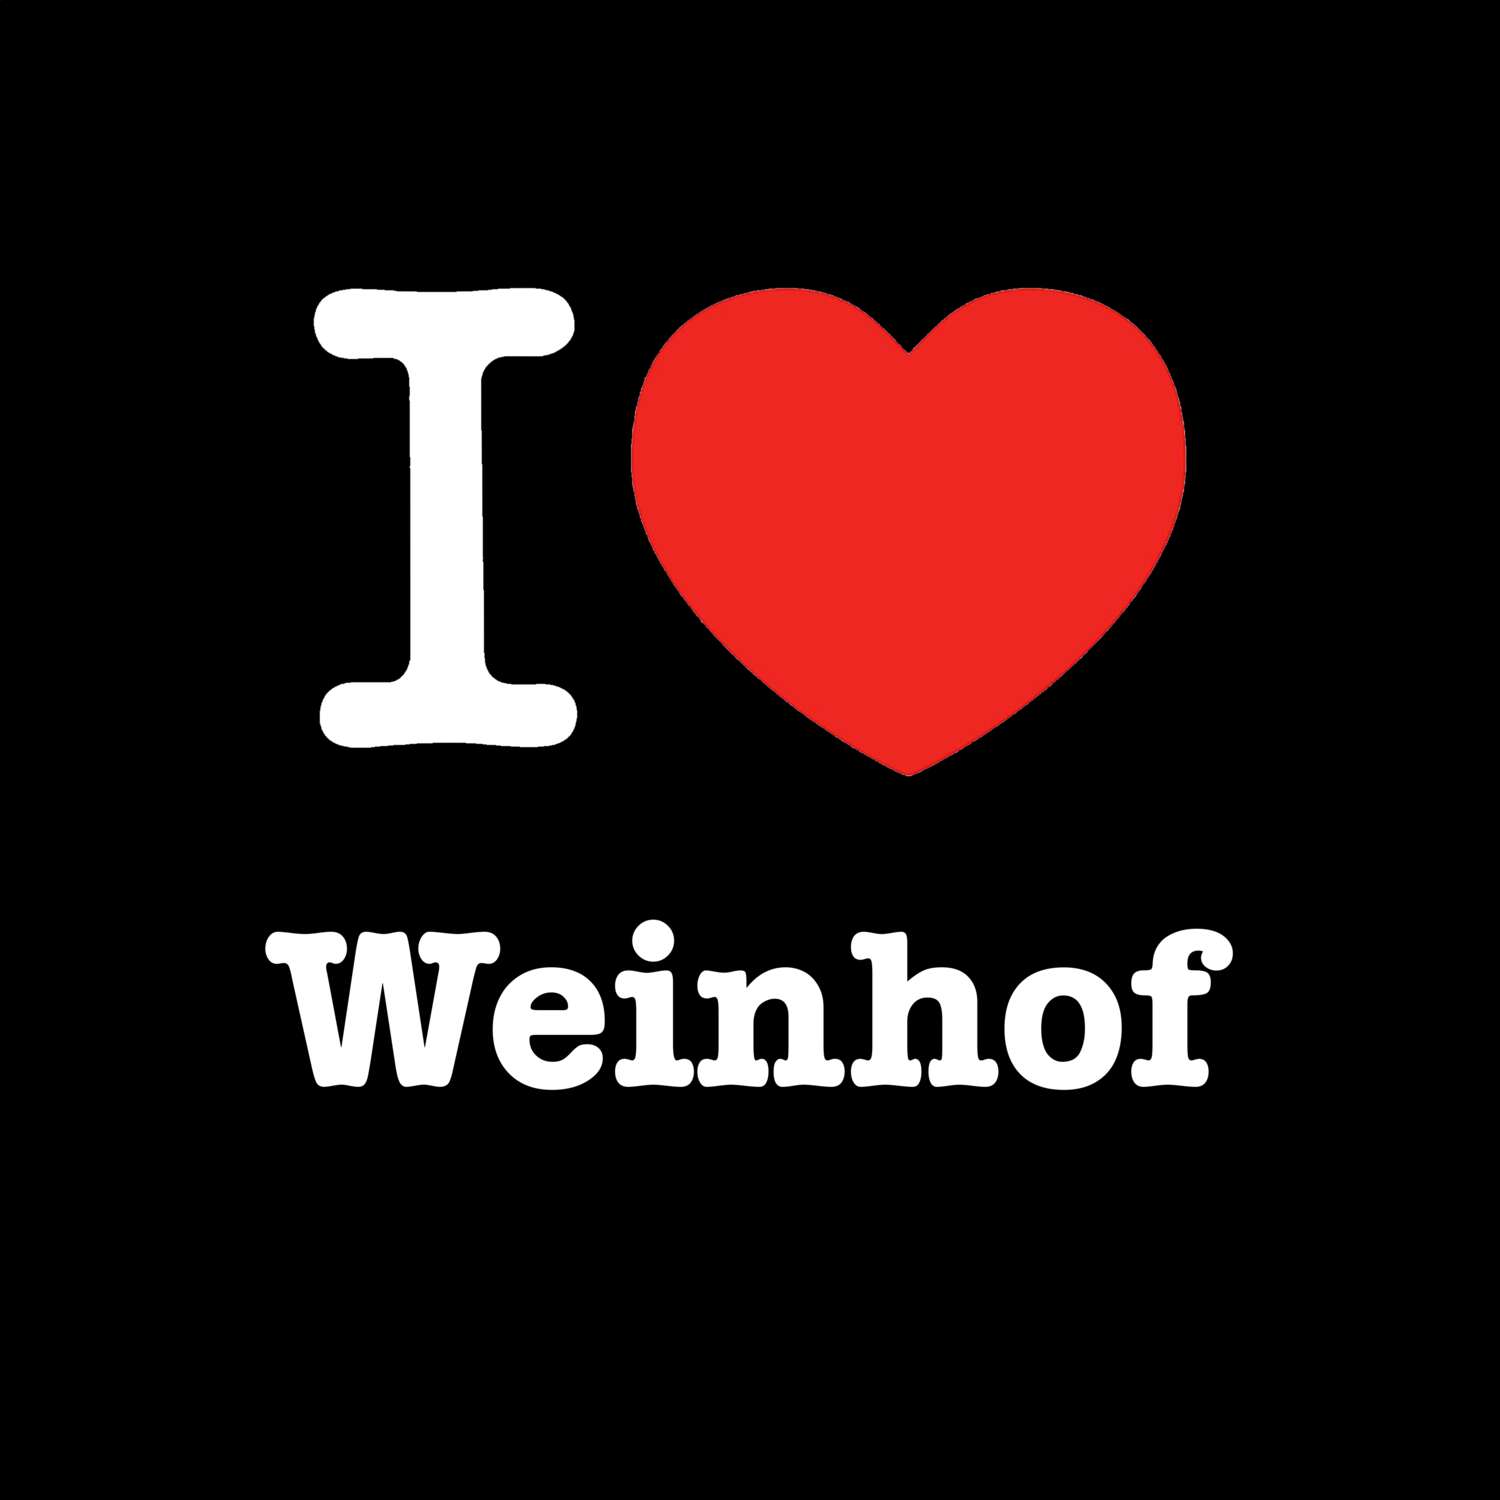 Weinhof T-Shirt »I love«